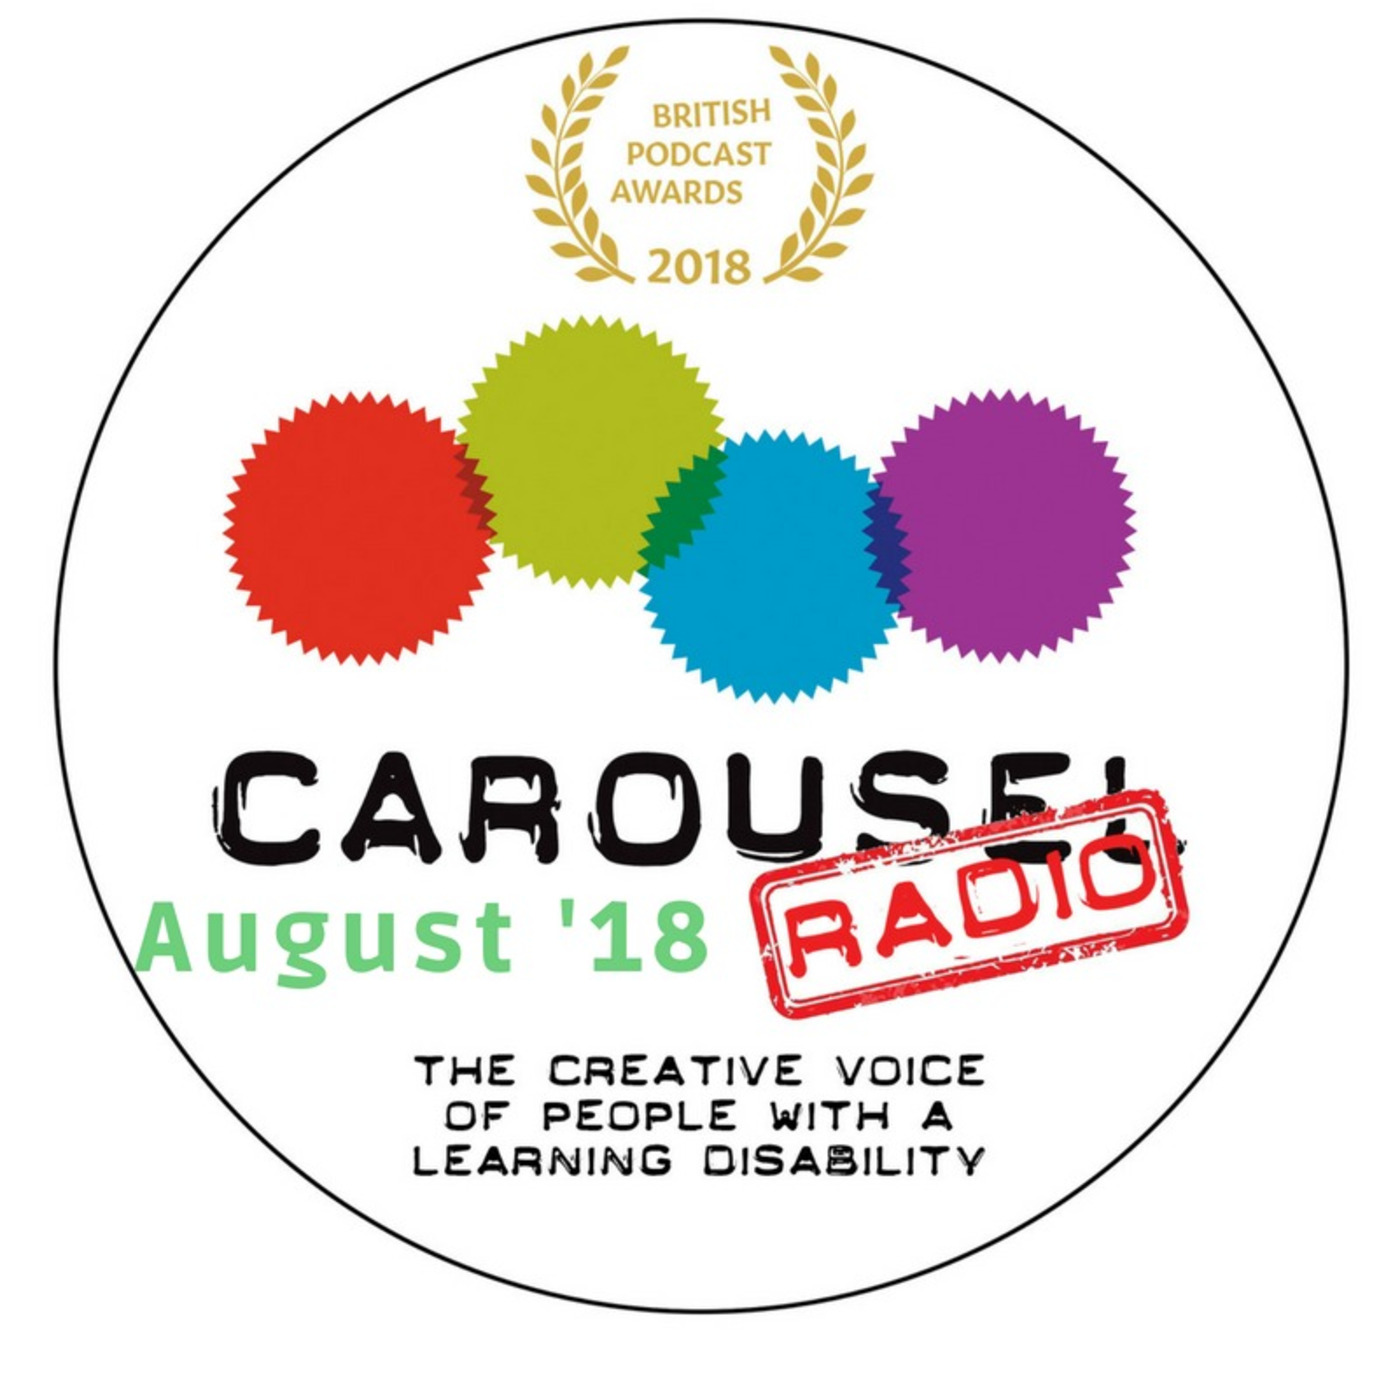 Carousel Radio August 2018